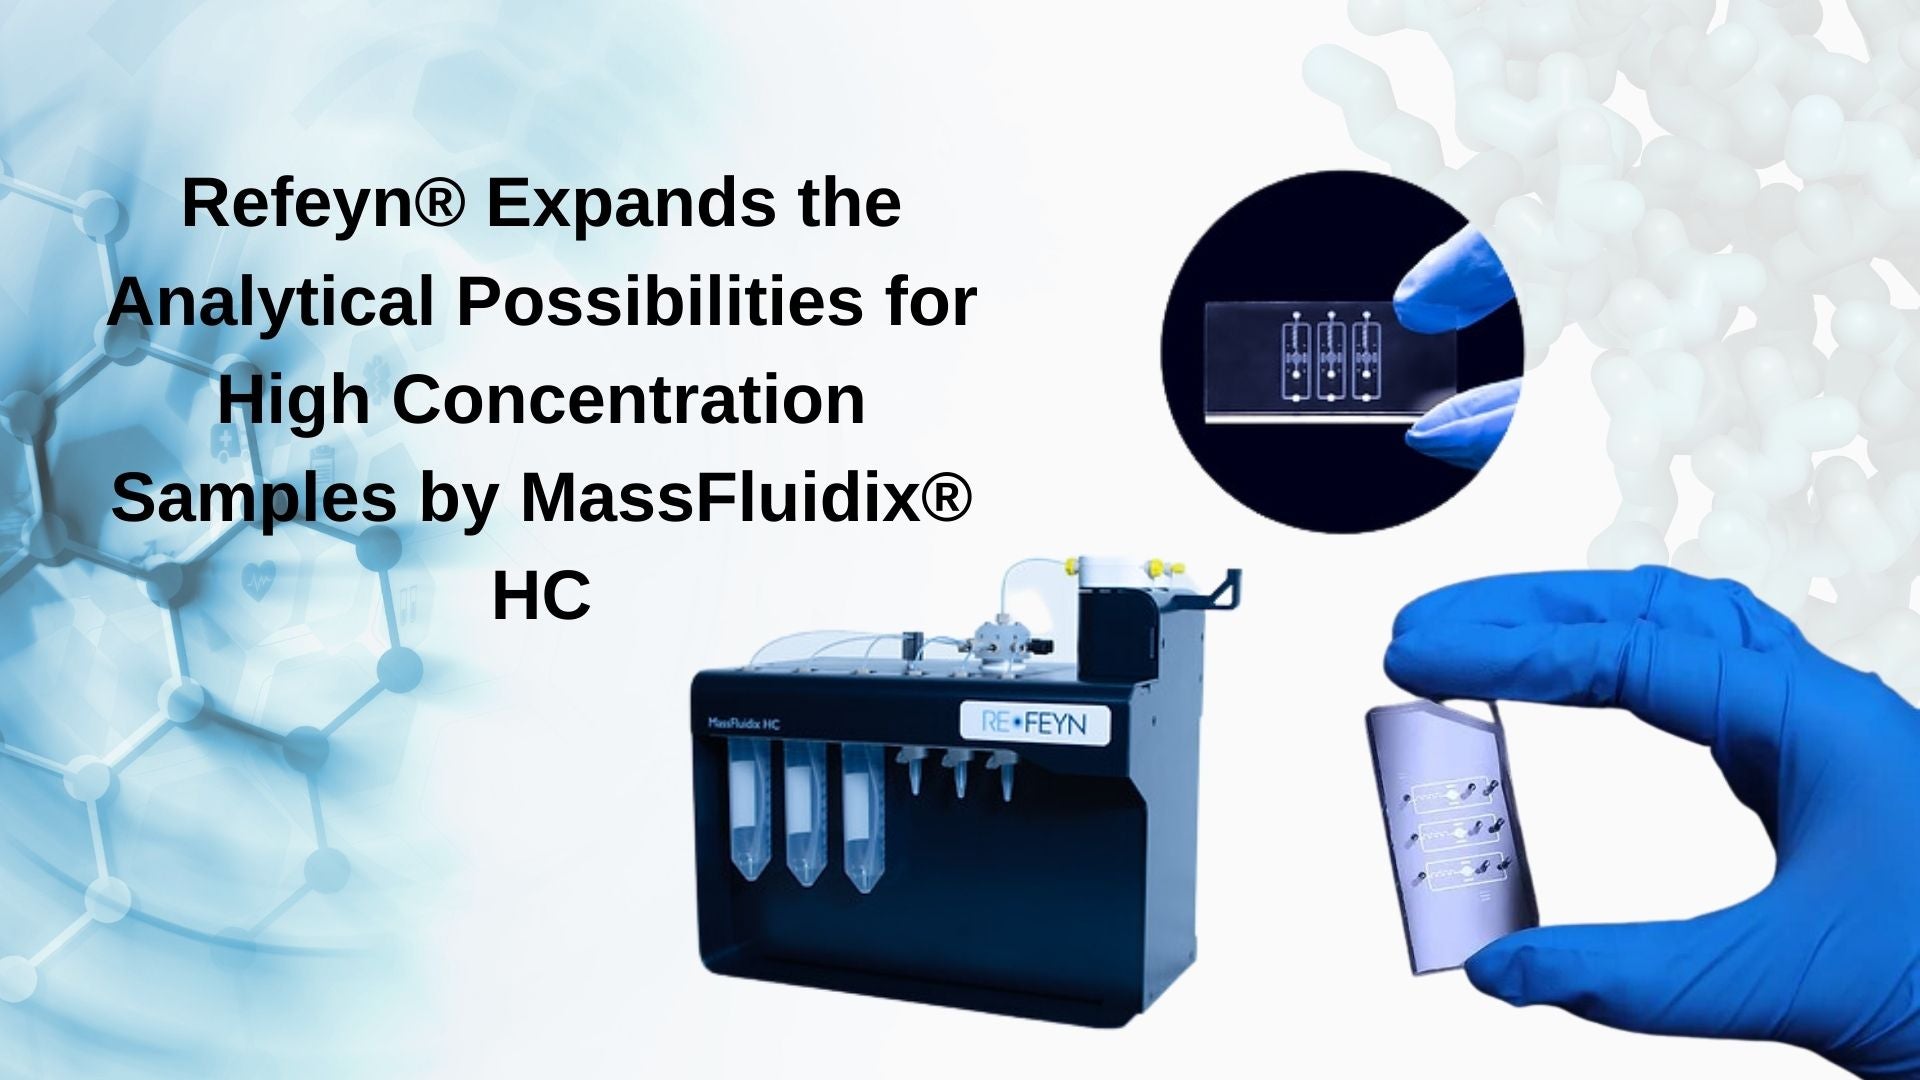 Refeyn unveils its latest innovation, the MassFuidix High Concentration (HC) microfluidic system.